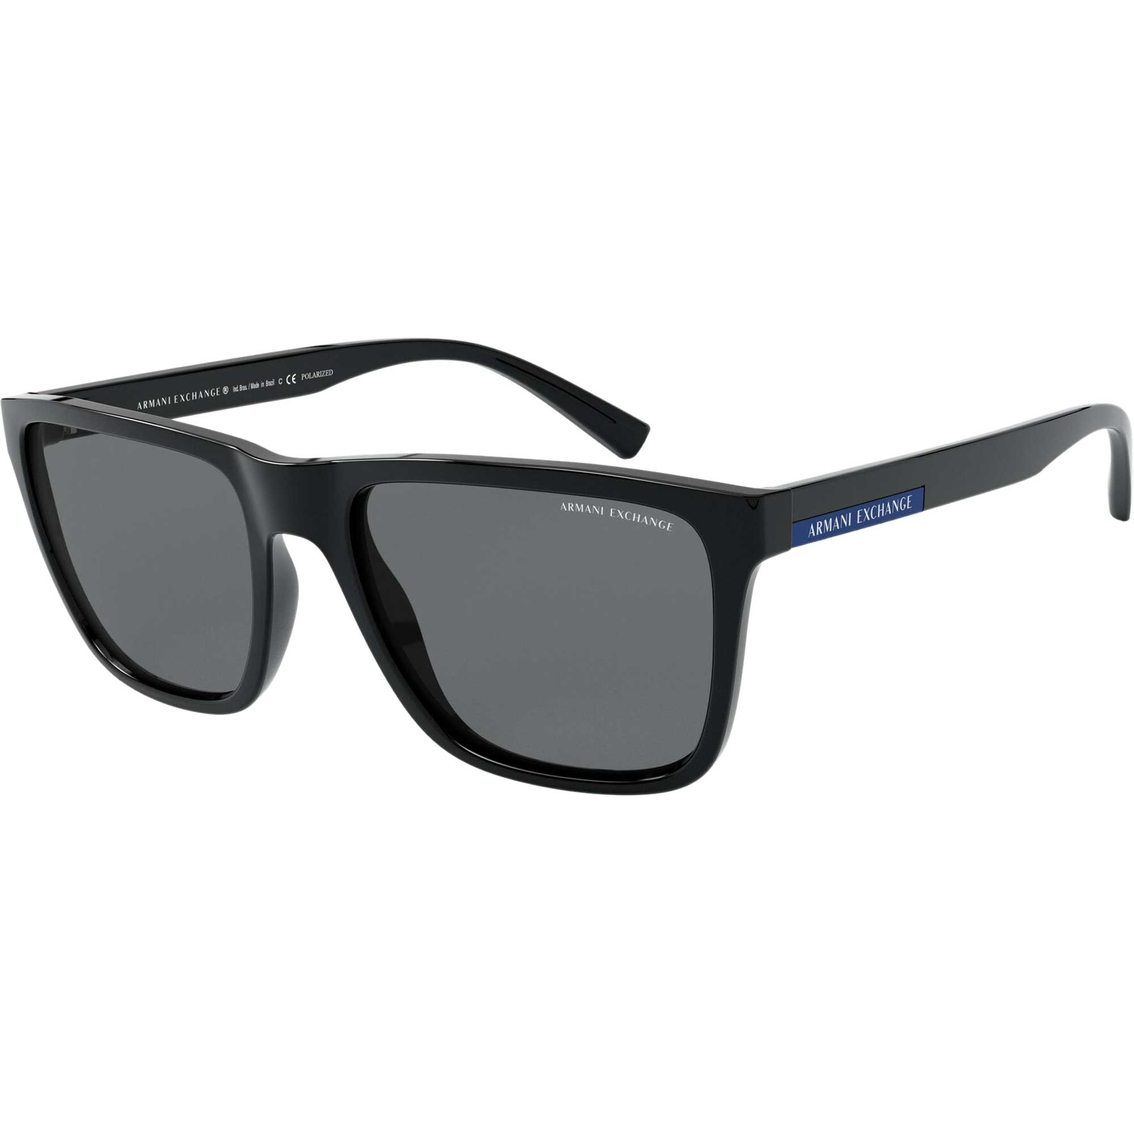 Armani Exchange Square Sunglasses 0ax4080s | Men's Sunglasses | Swim ...